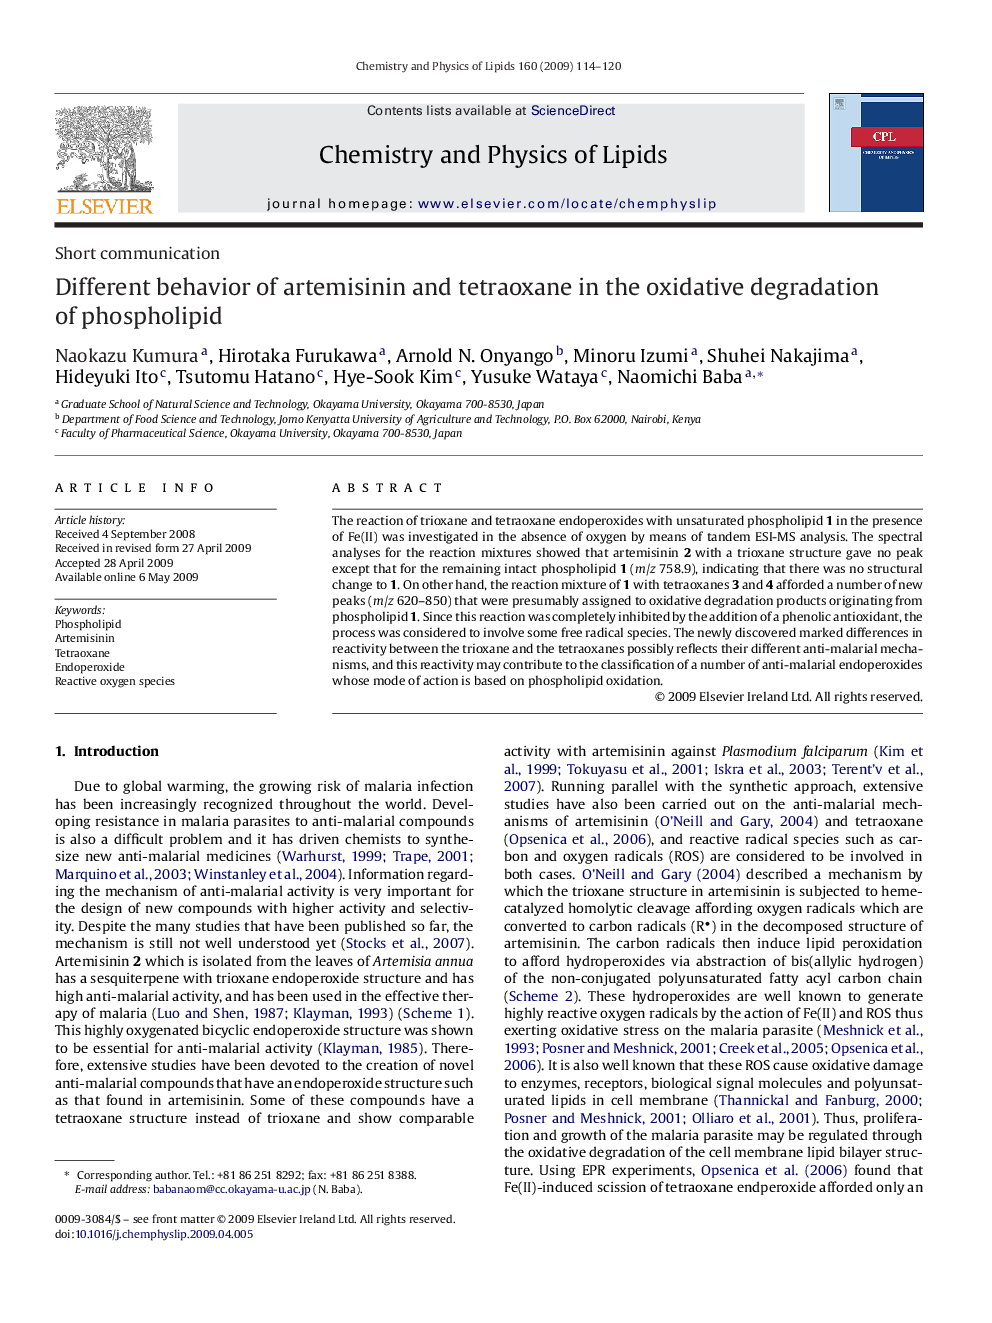 Different behavior of artemisinin and tetraoxane in the oxidative degradation of phospholipid